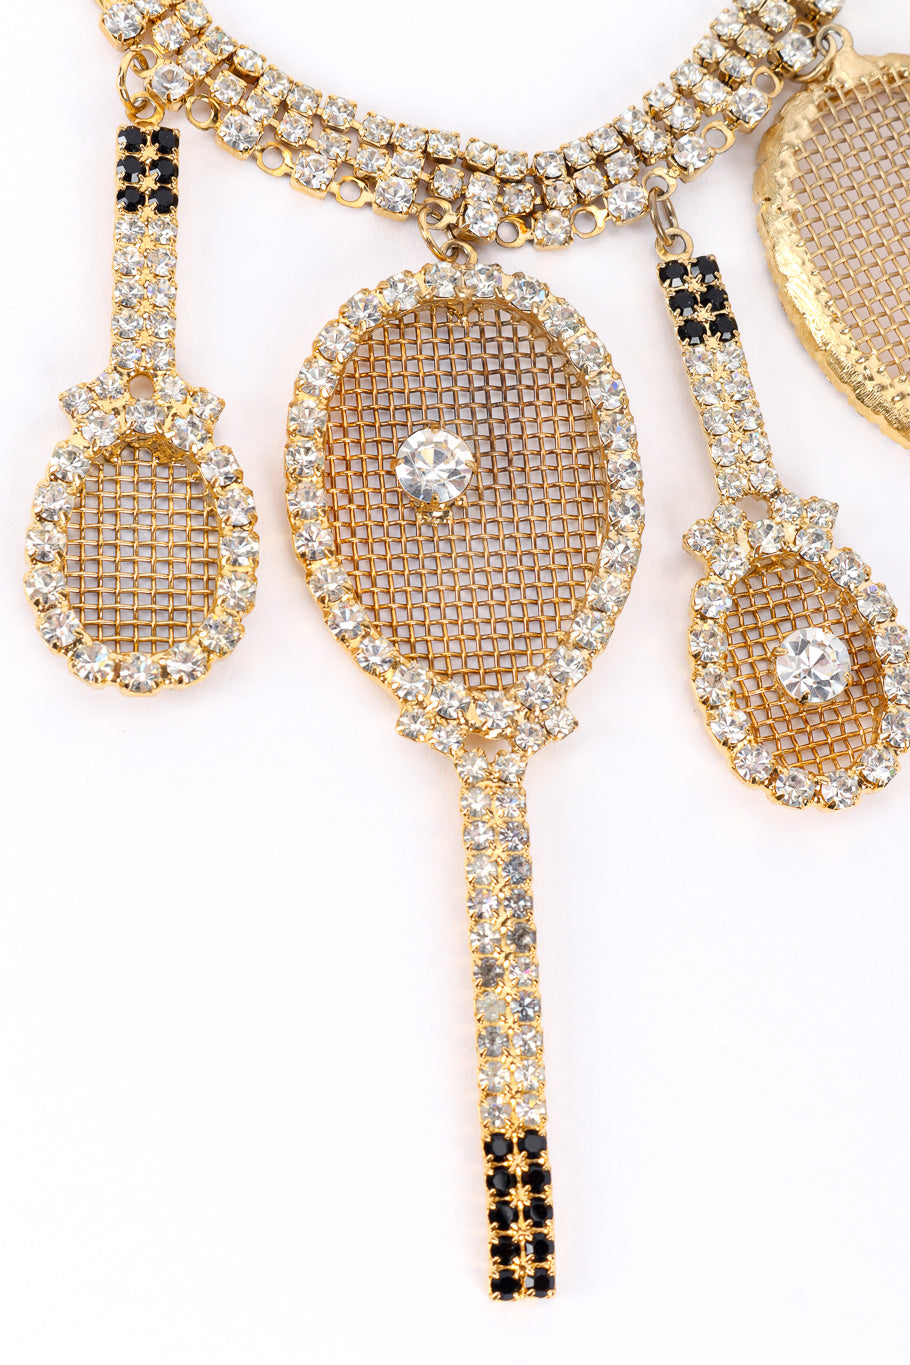 Vintage Dorothy Bauer Tennis Racket Charm Necklace hook clasp closeup of racket @Recessla